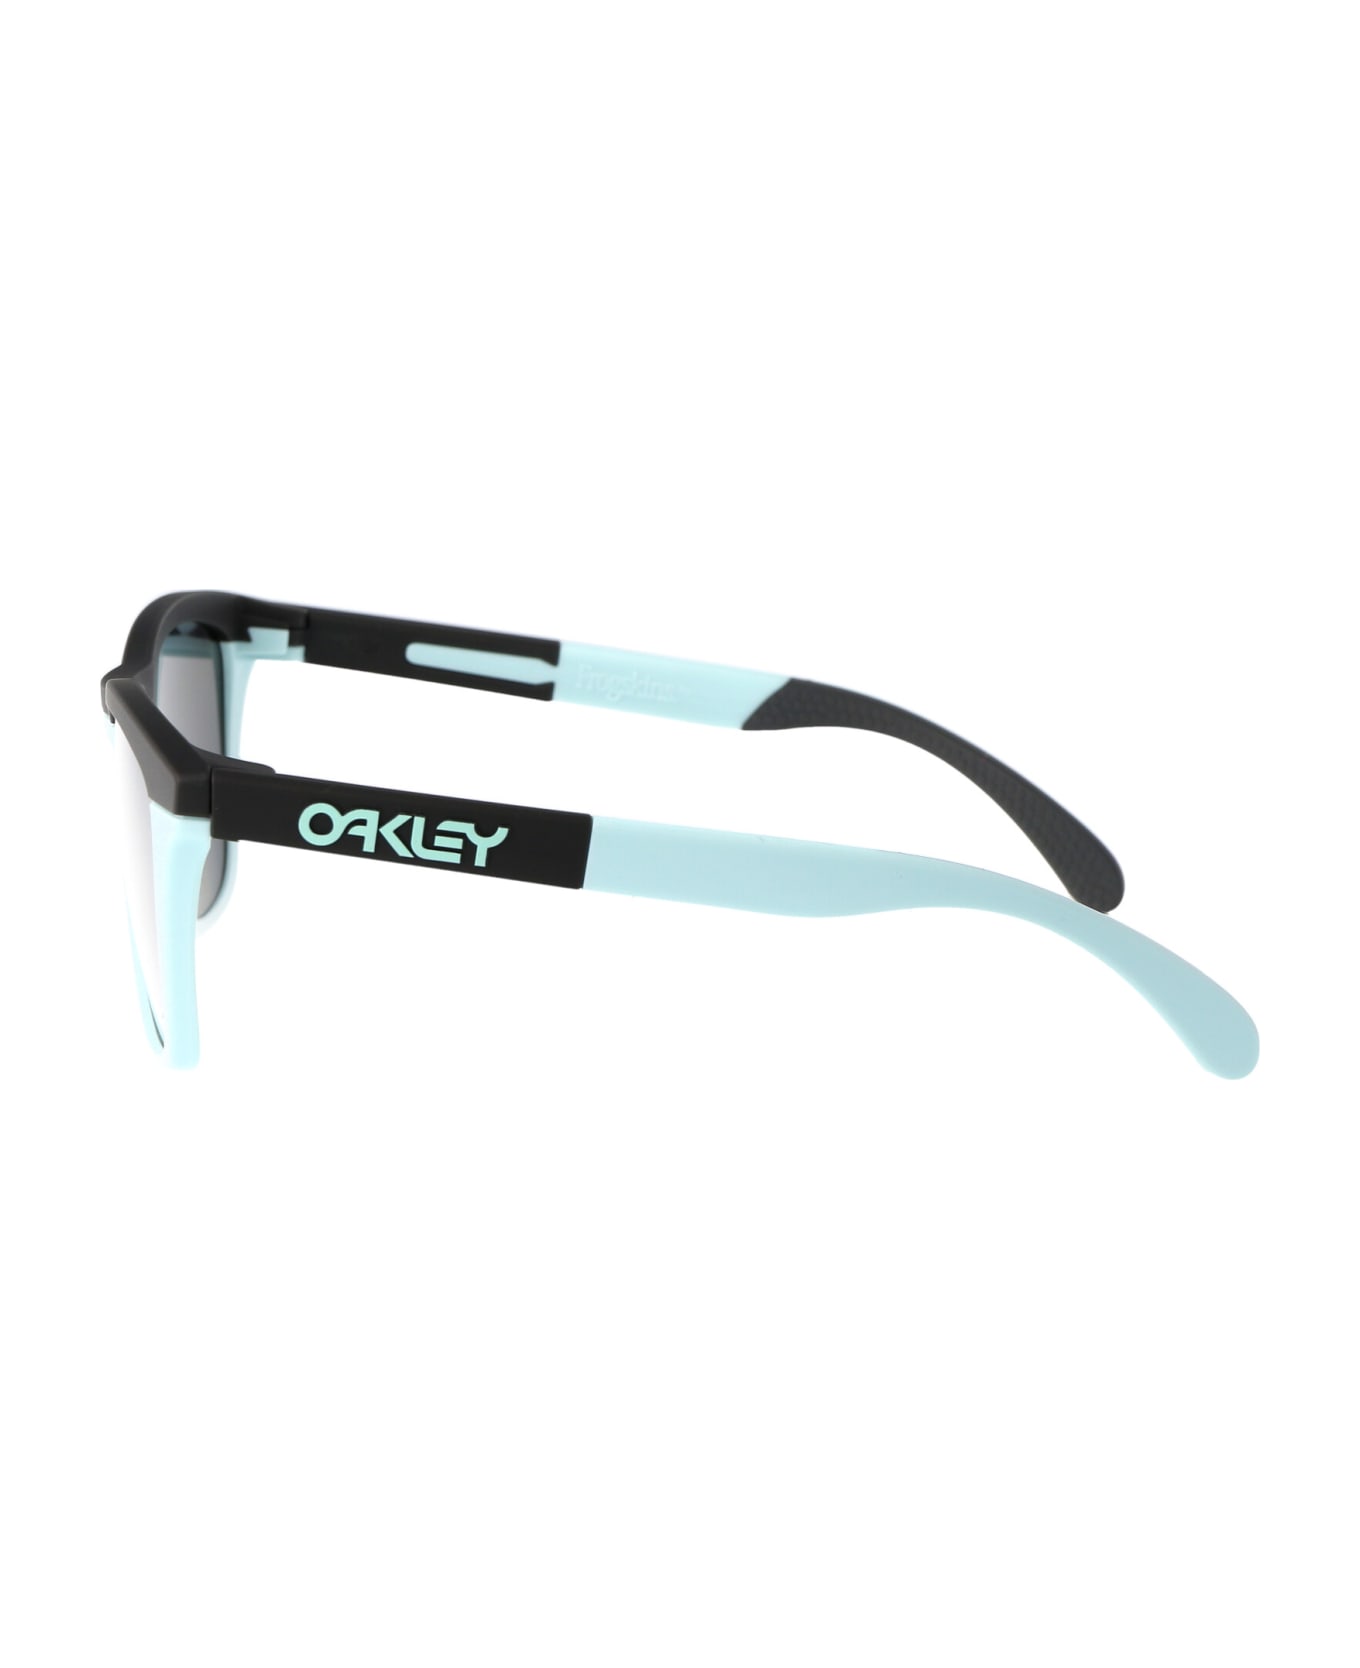 Oakley Frogskins Range Sunglasses - 928403 Matte Carbon/Blue Milkshake サングラス